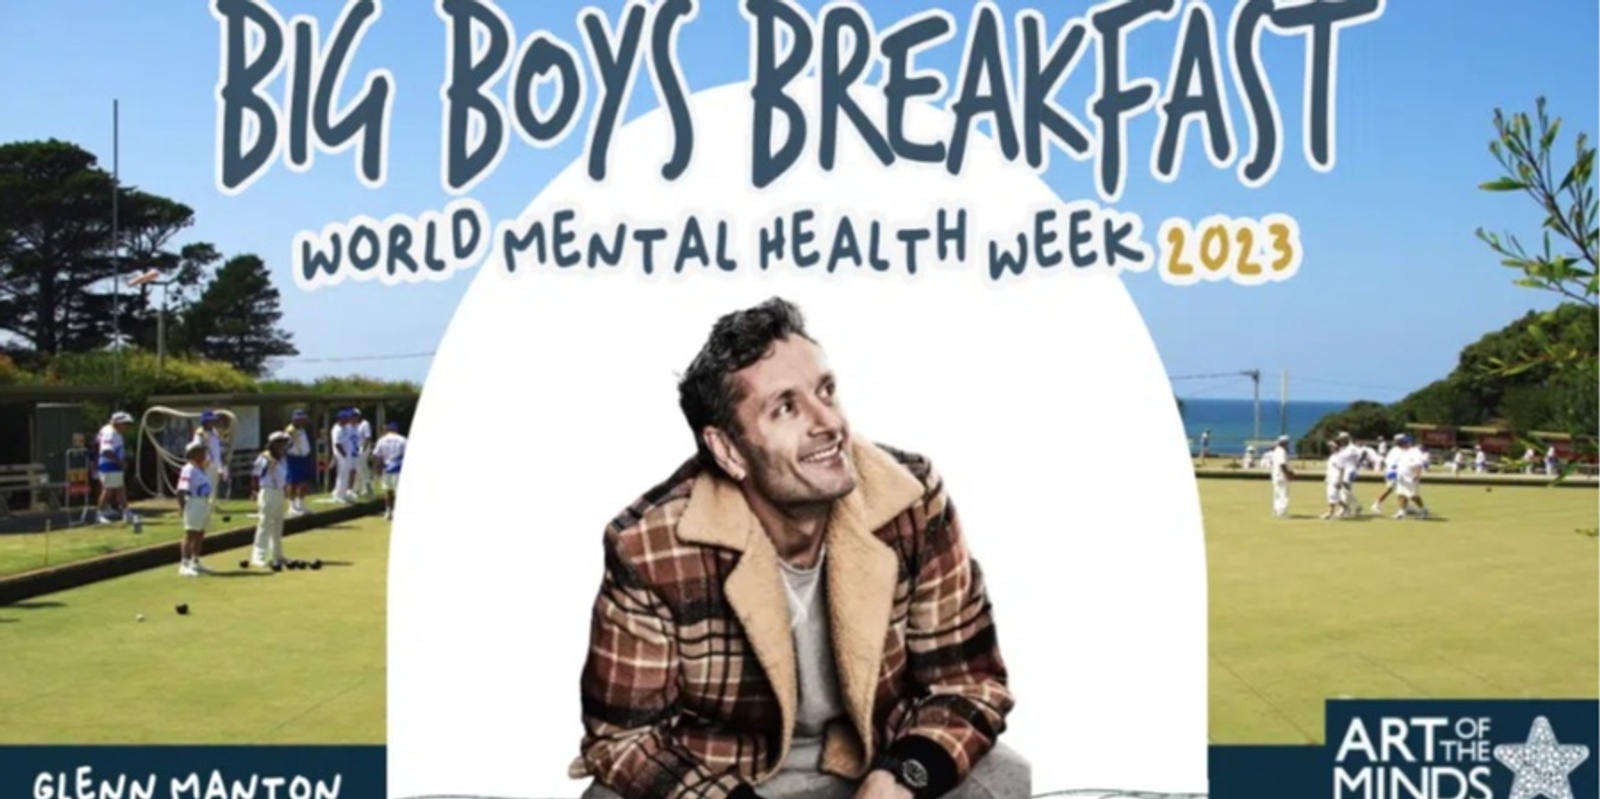 Banner image for Big Boys Breakfast